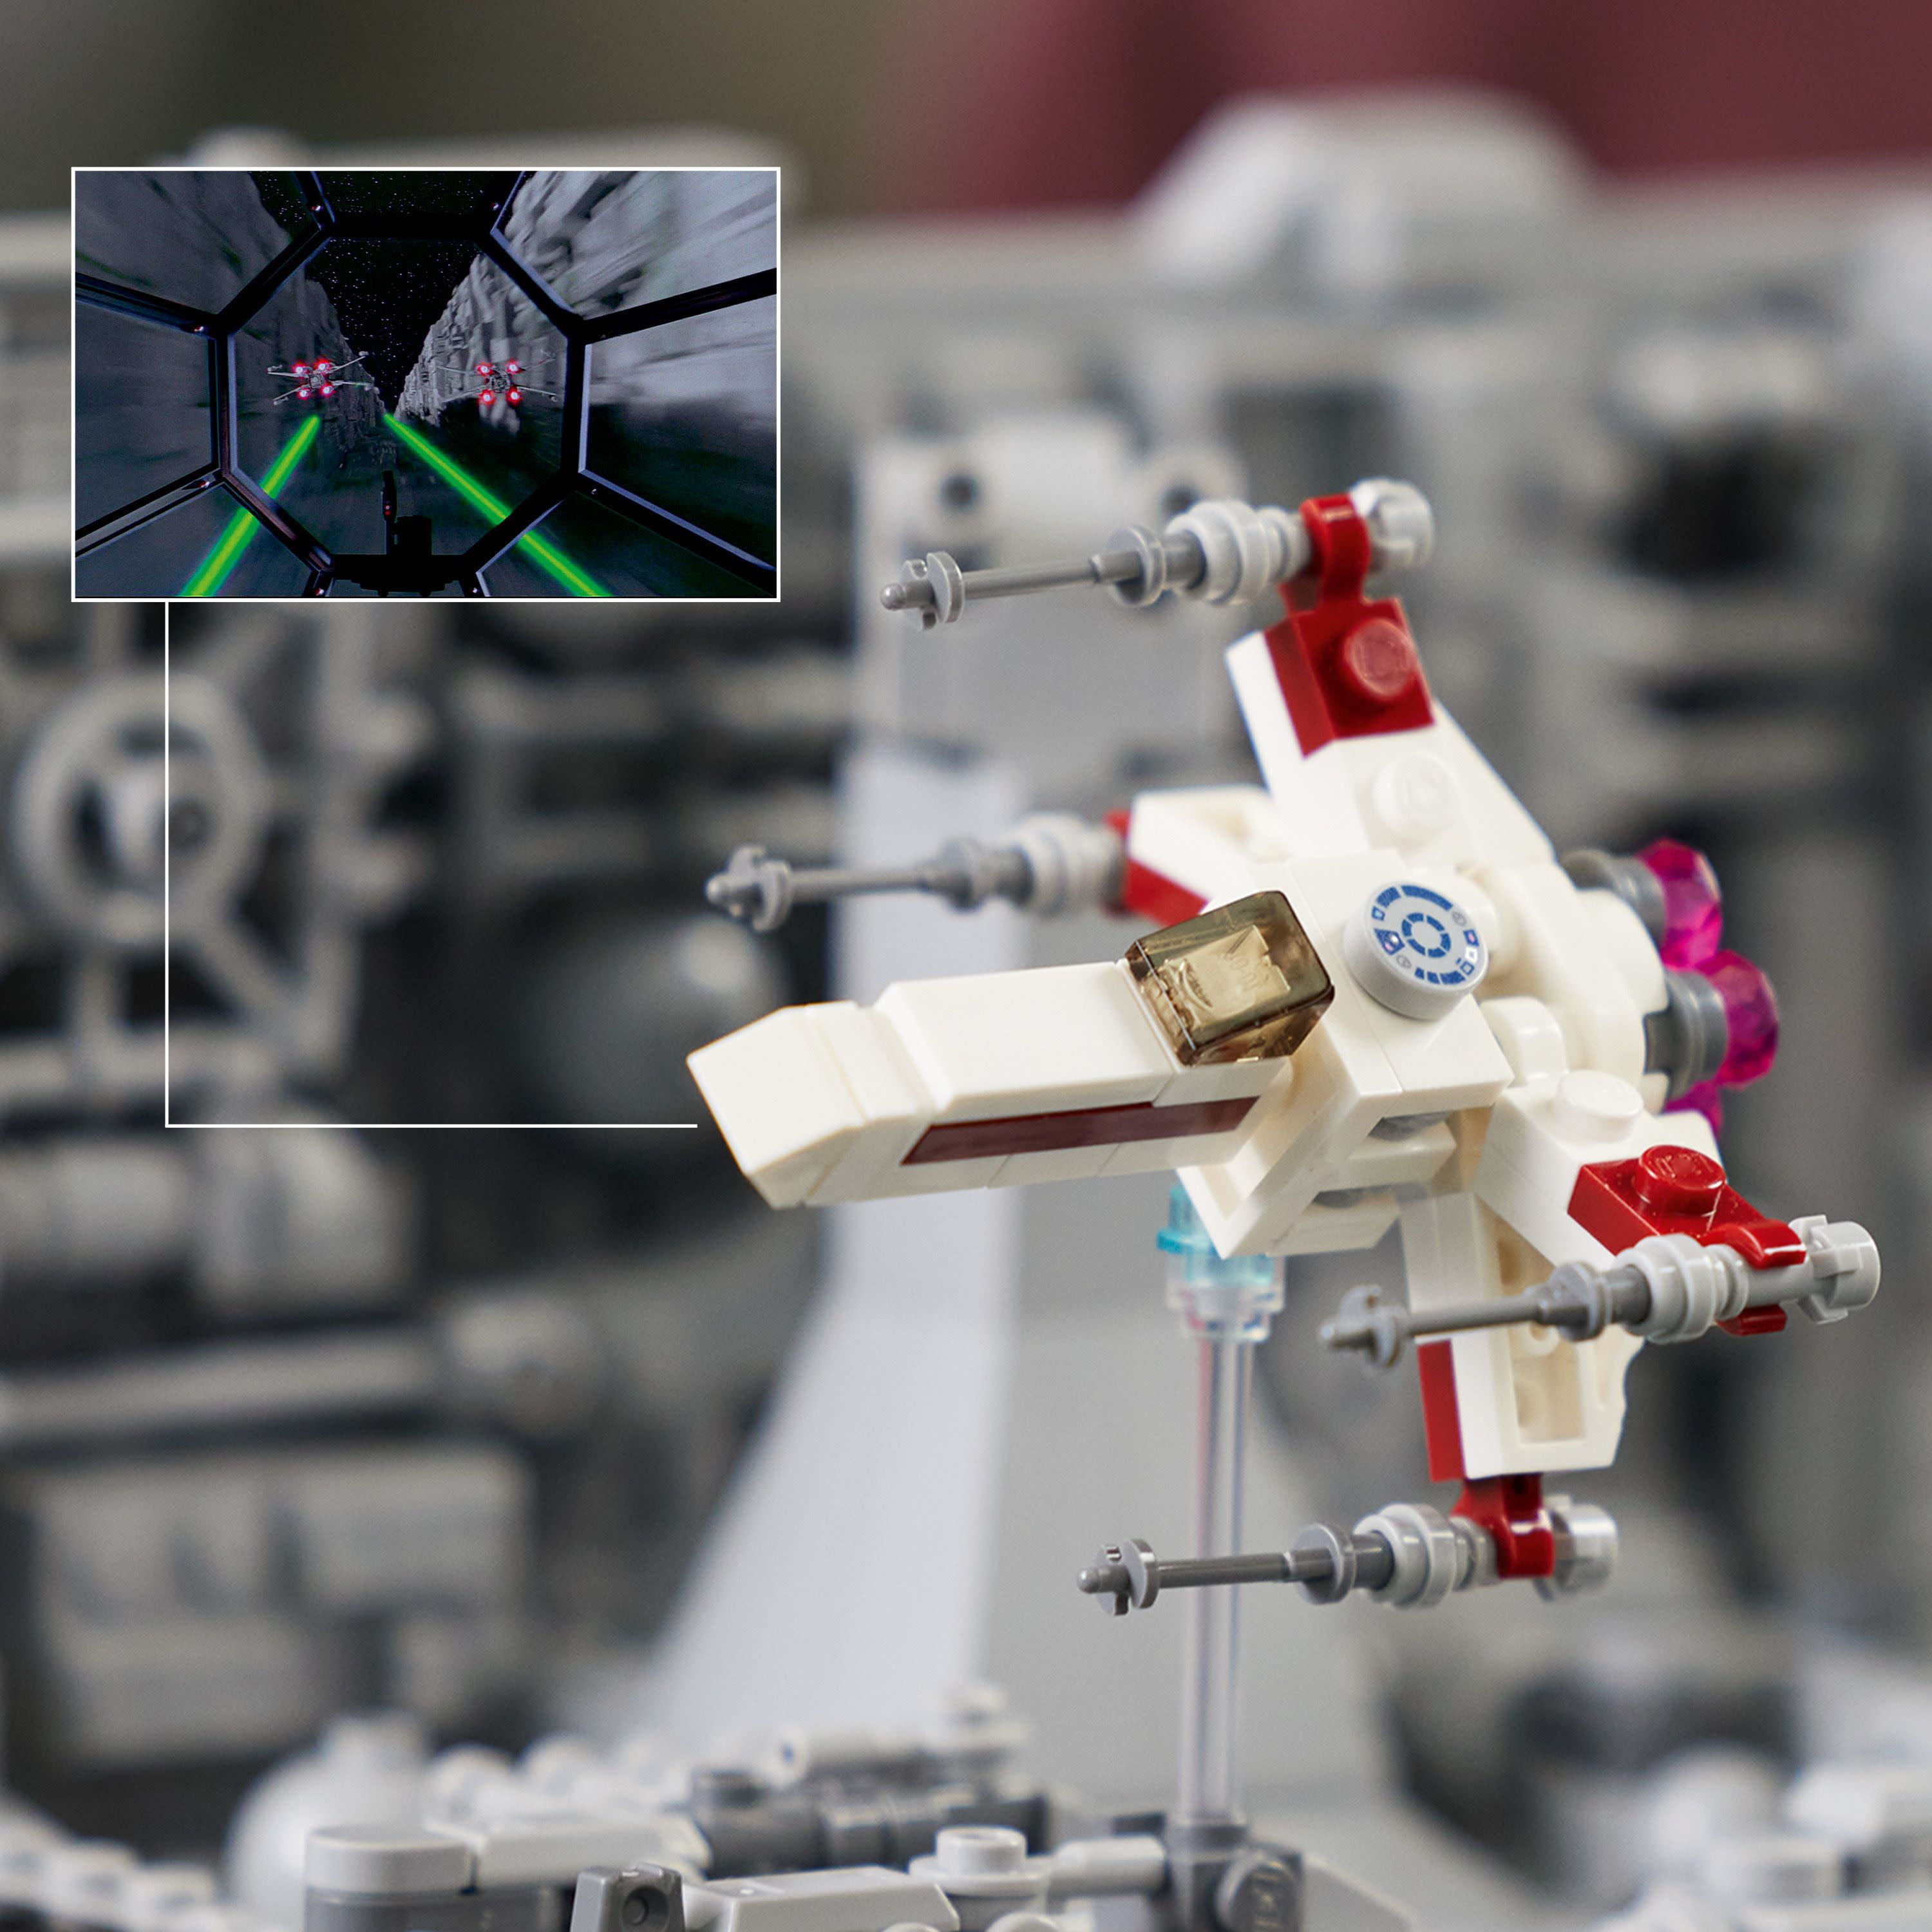 Jeux de construction Lego Star Wars - Attack on the Death Star - diorama, Affiches, cadeaux, merch